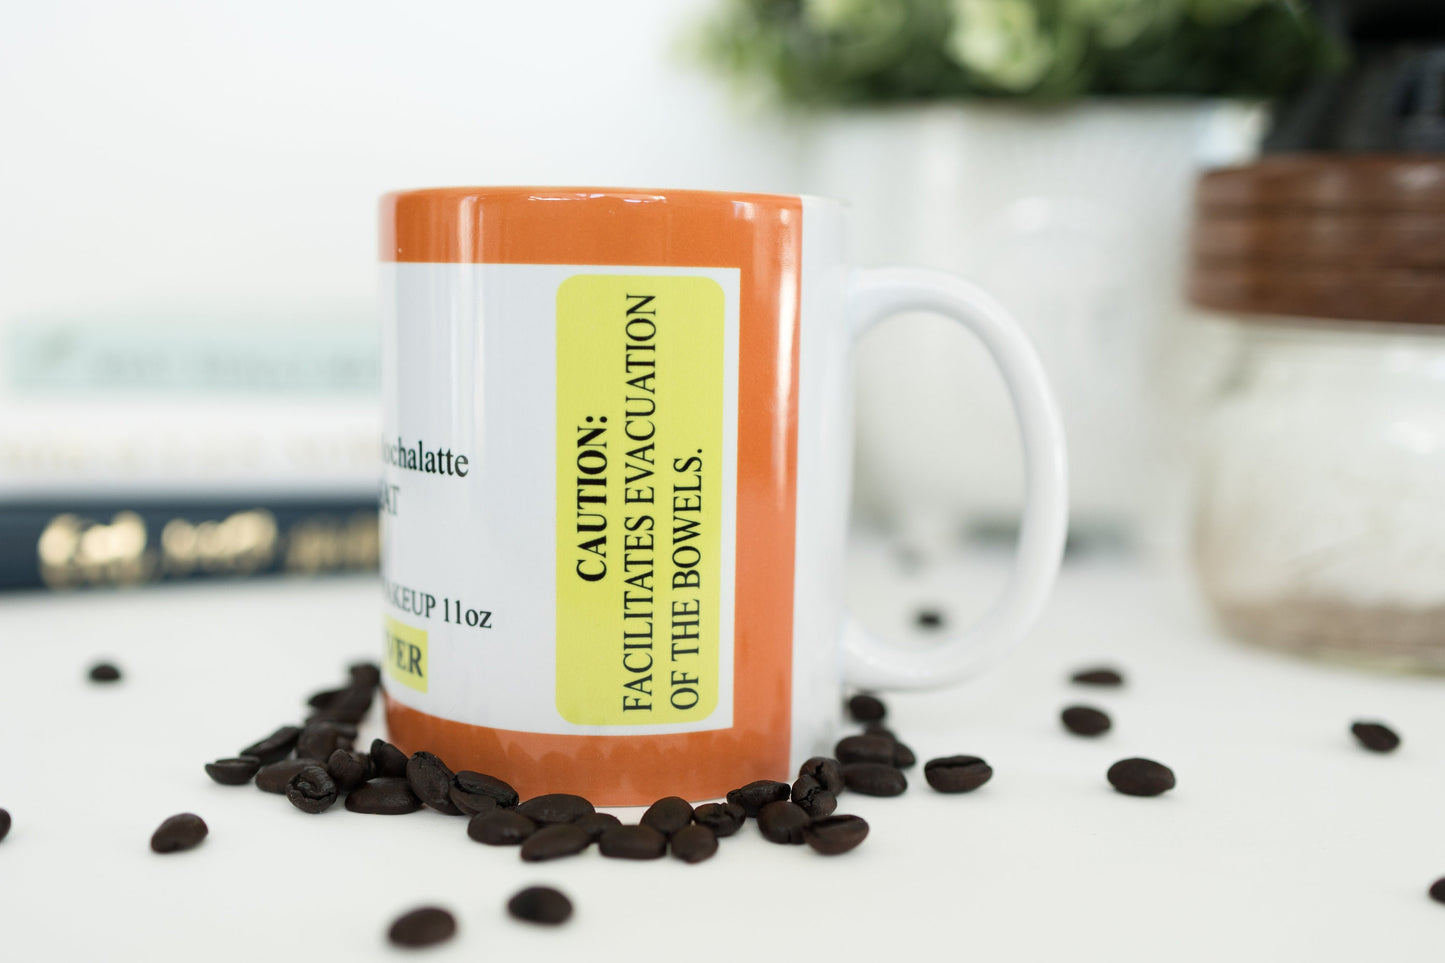 Prescription Coffee Mug Gift Ideas, Novelty gifts for coffee lovers- 11 oz.